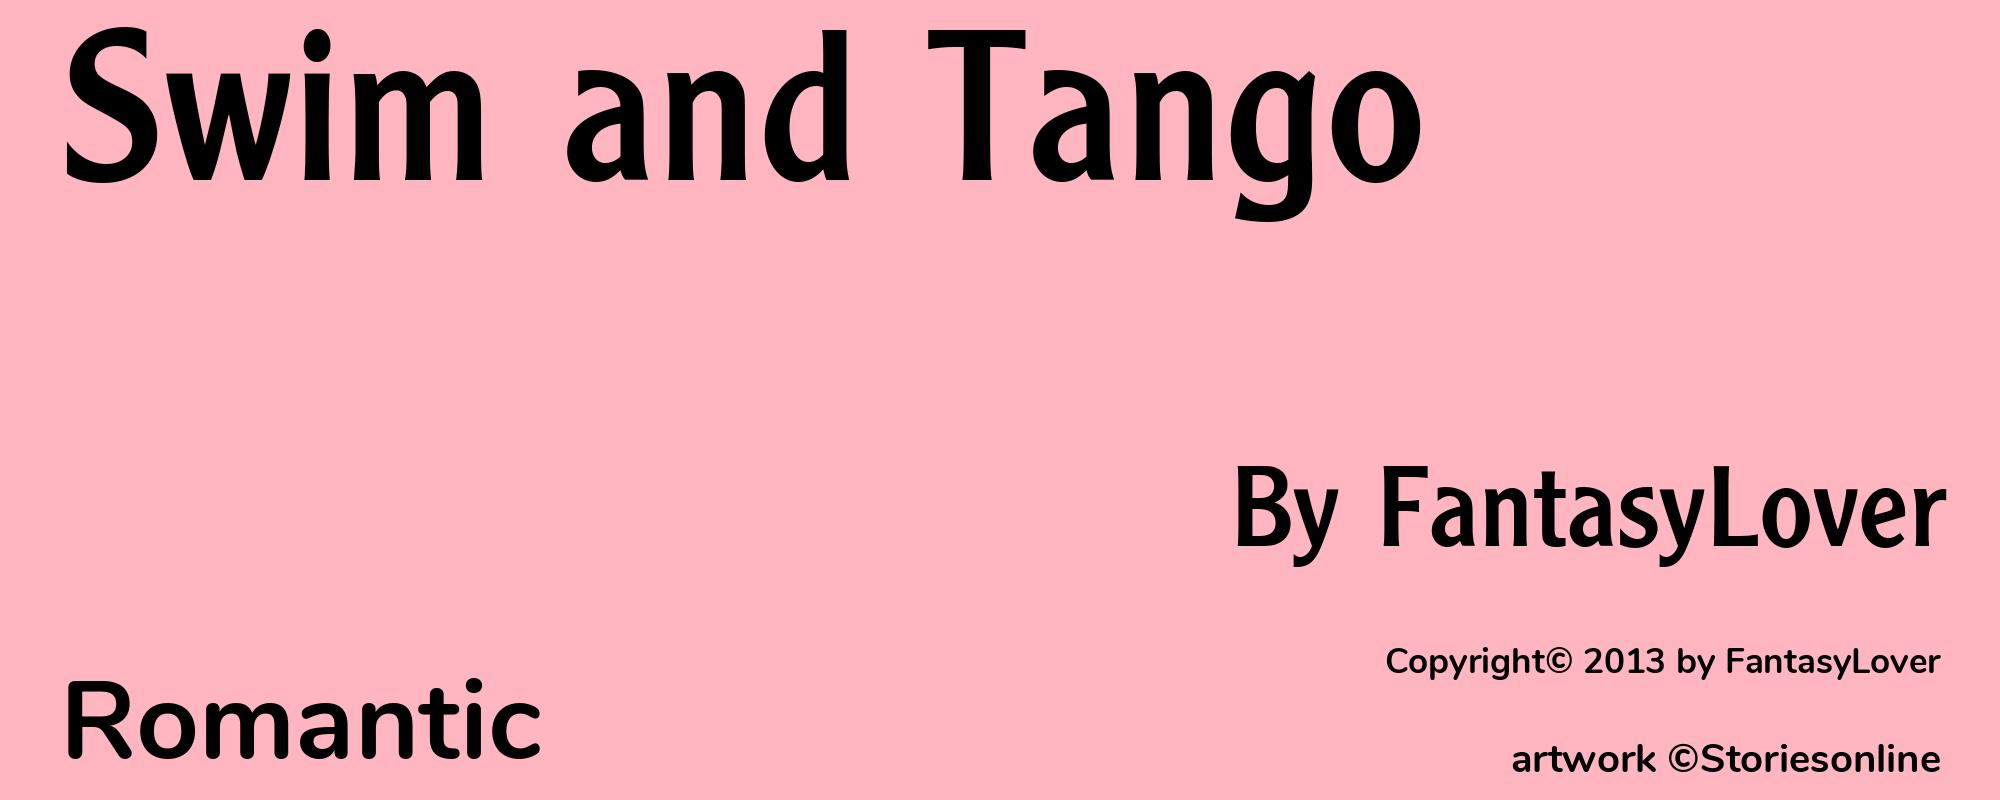 Swim and Tango - Cover